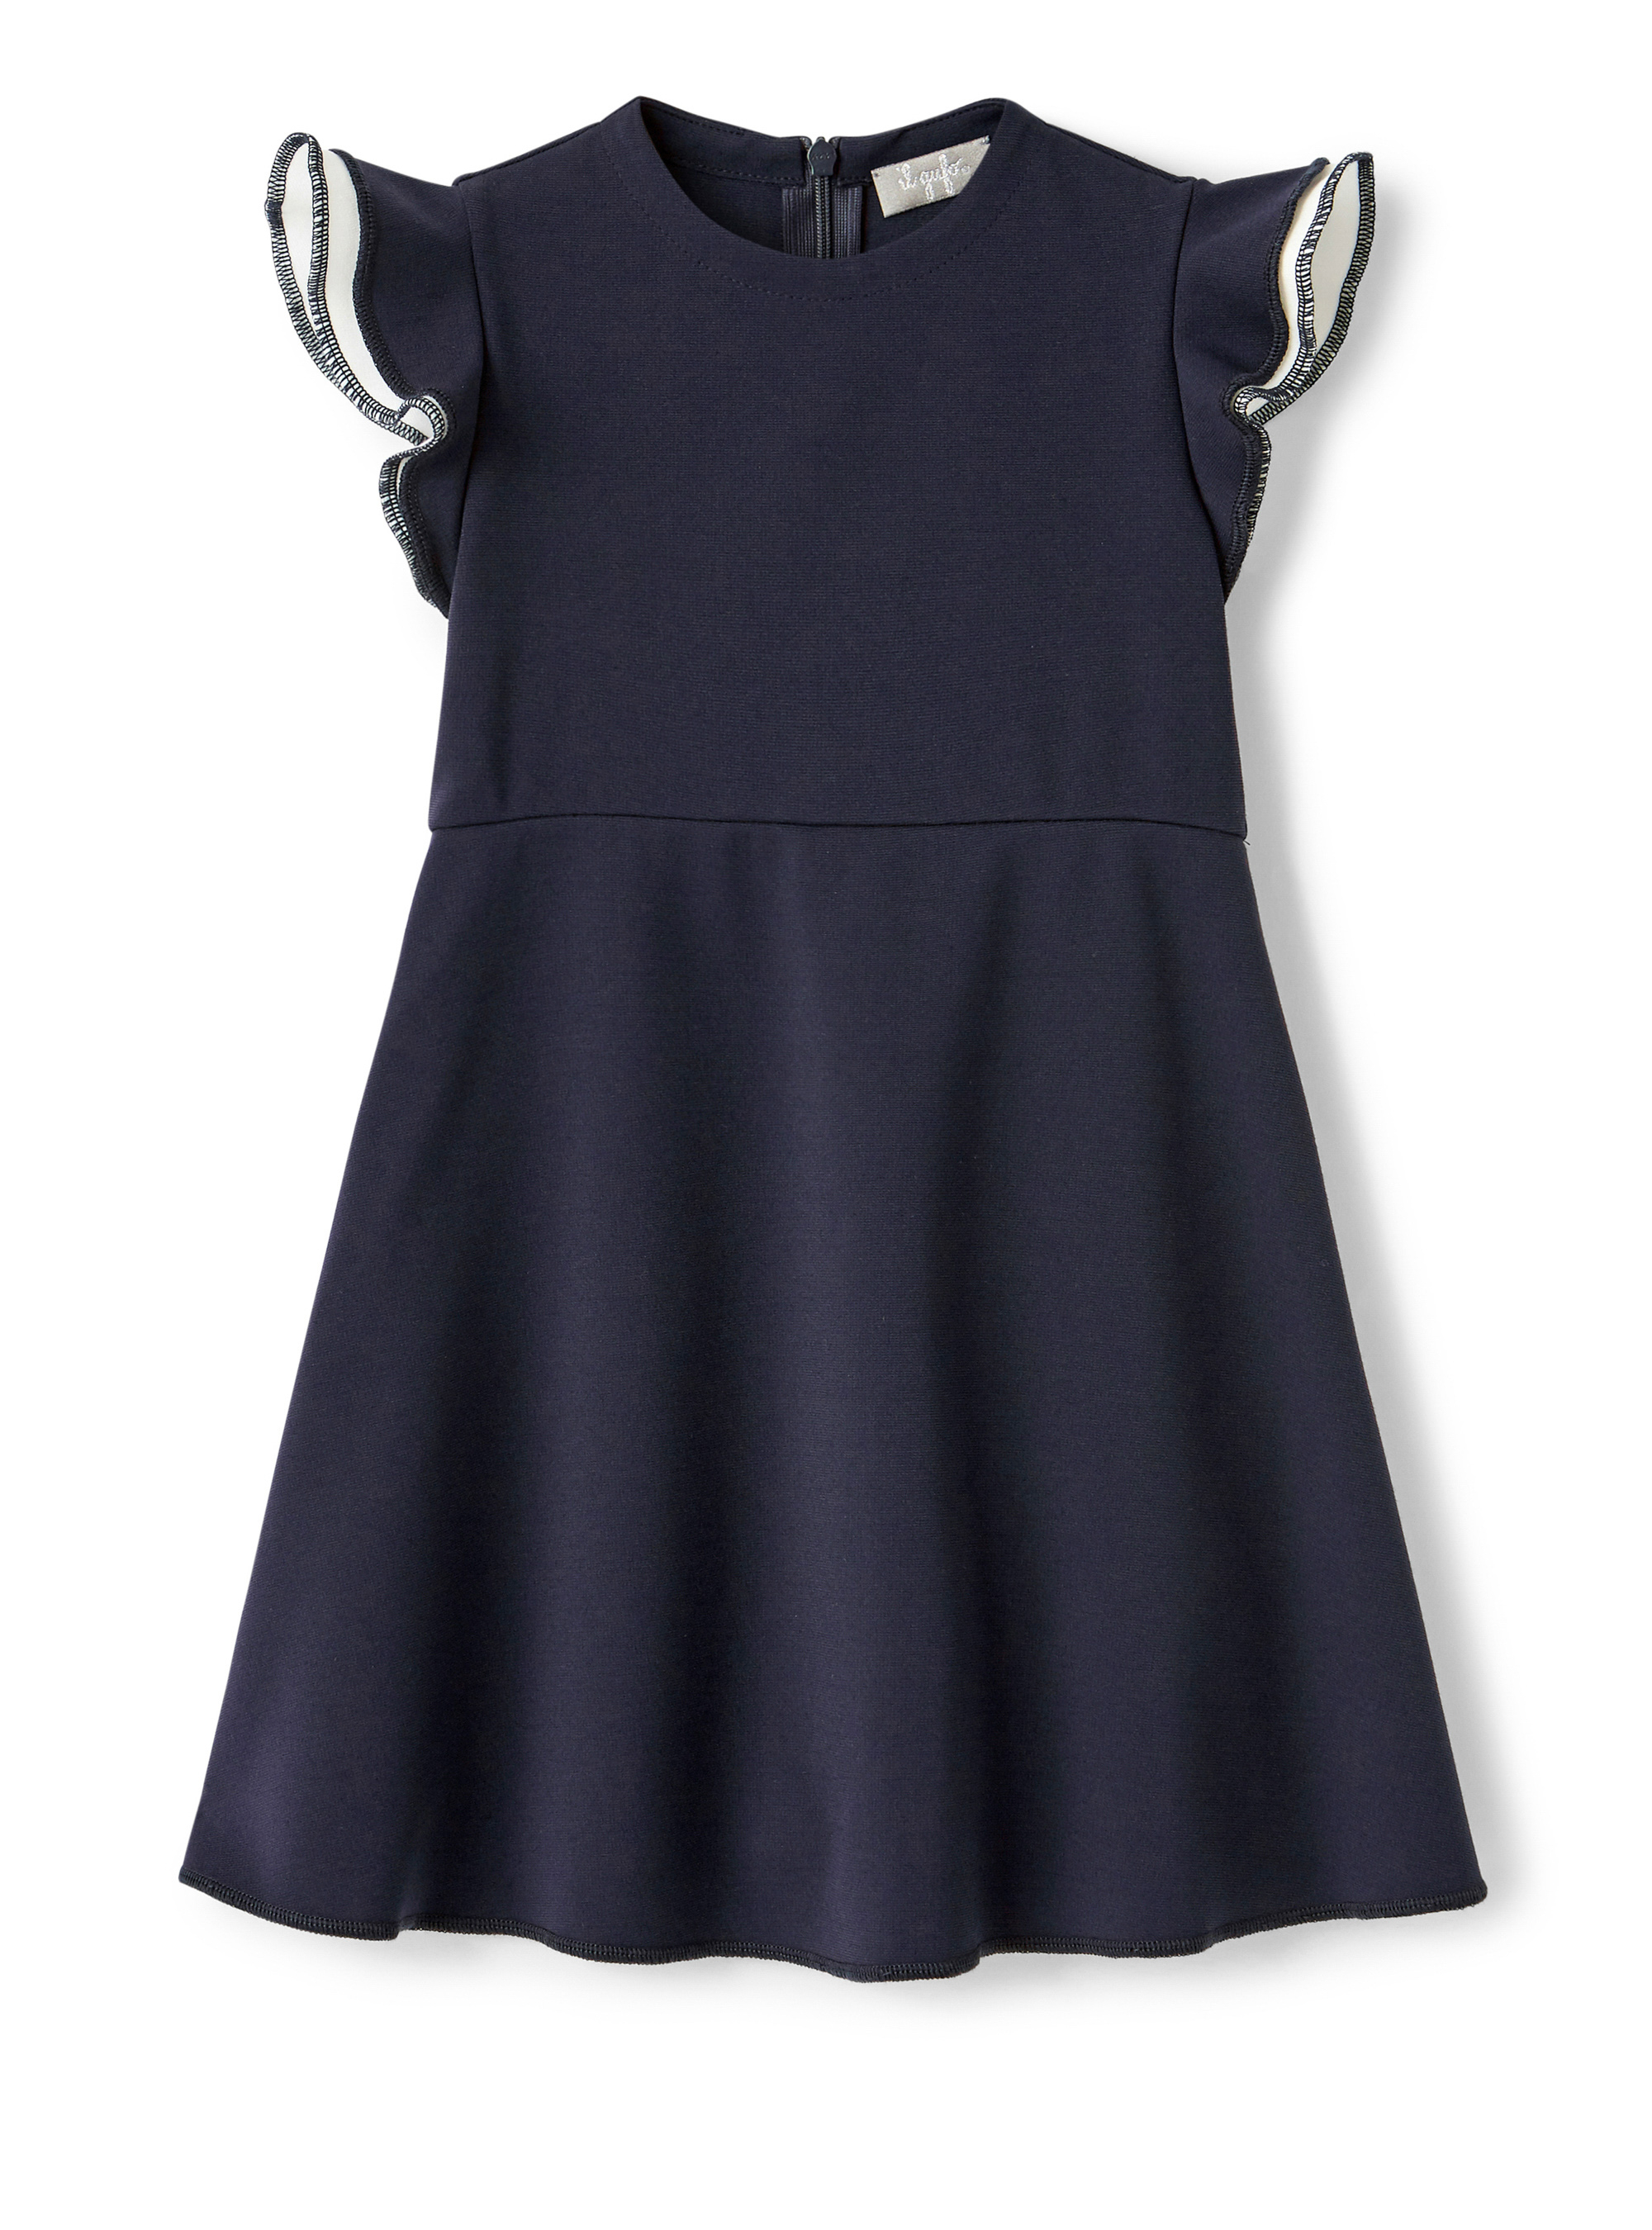 Blue sleeveless dress with ruffles - Dresses - Il Gufo